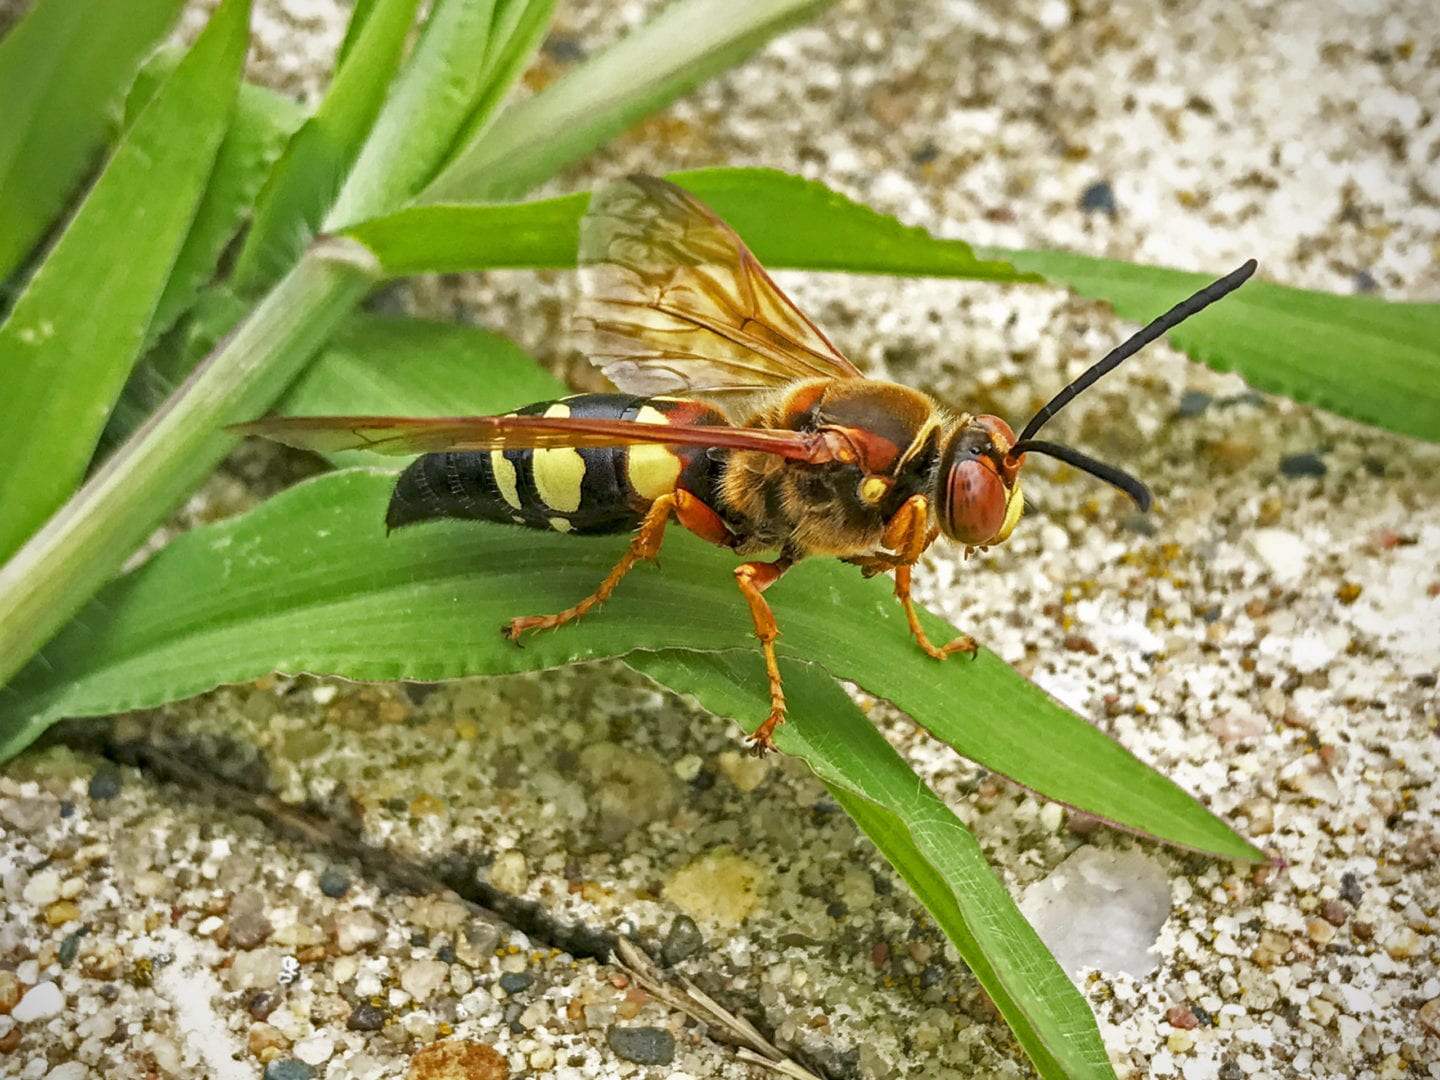 control wasp